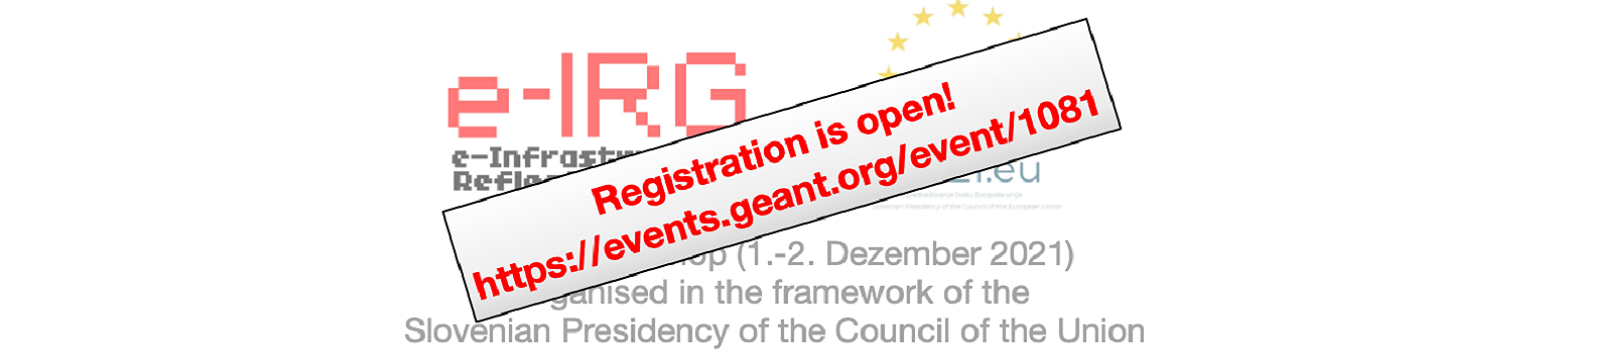 1-2 Dicembre 2021, e-IRG Workshop